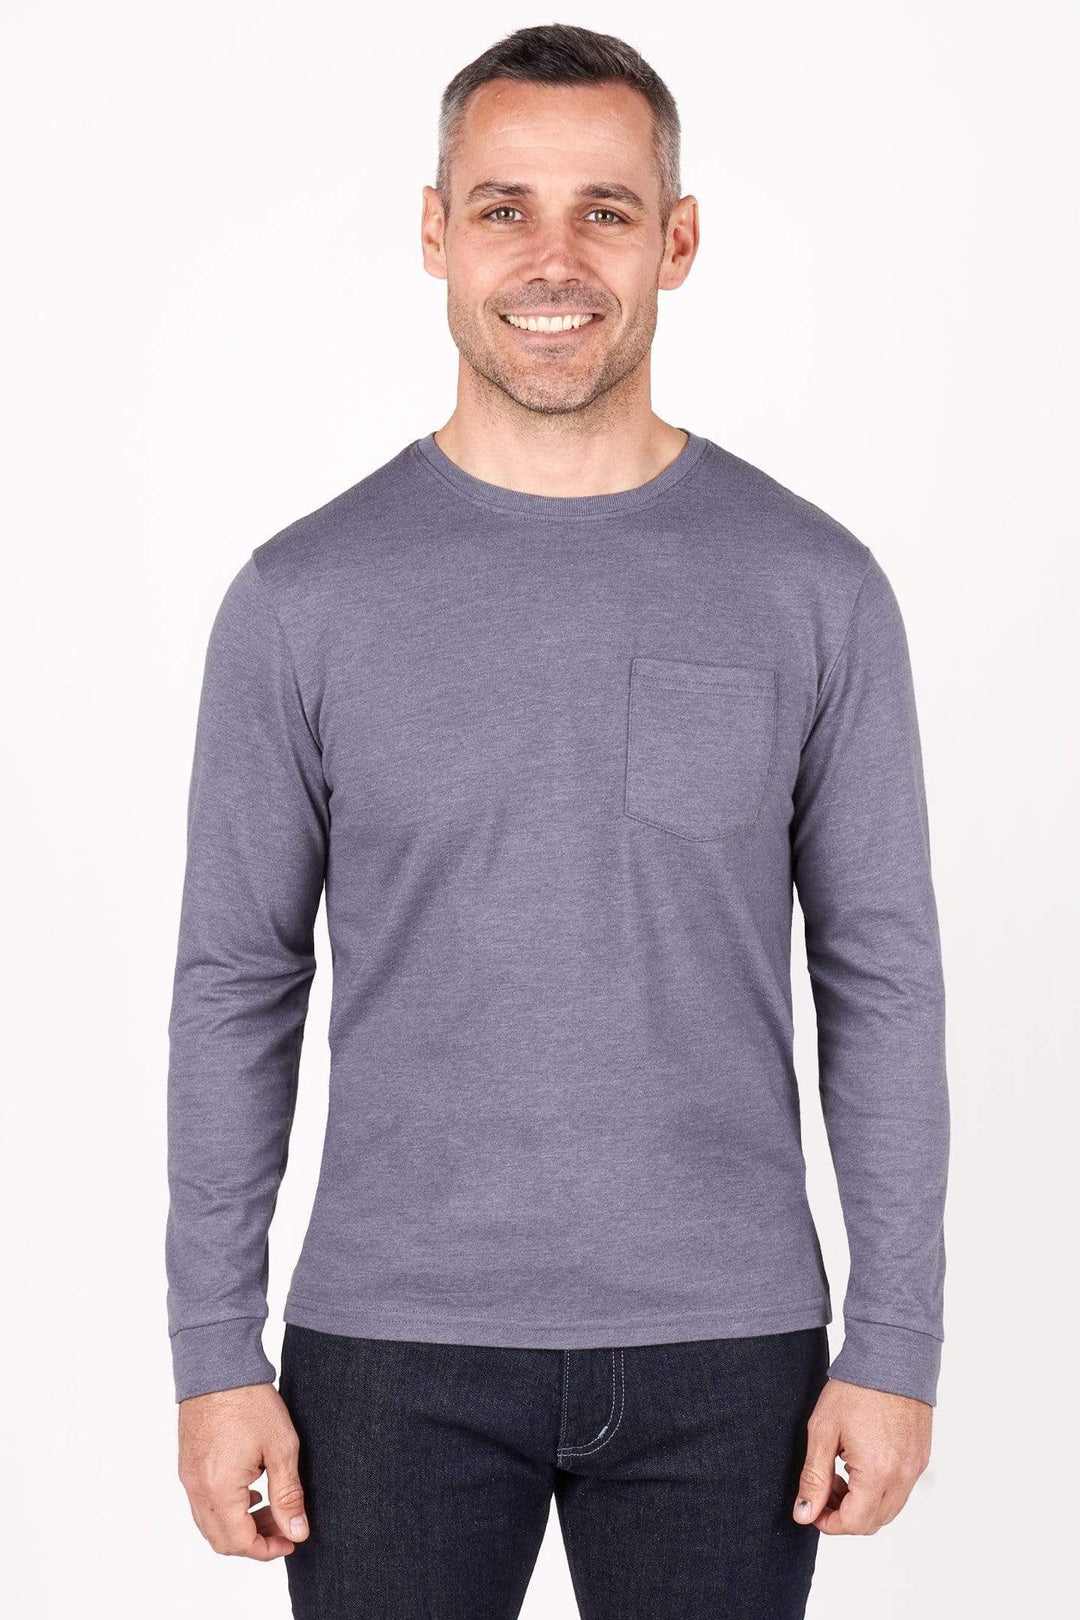 Buy Heather Grey Long Sleeve Pocket Tee for Short Men | Ash & Erie   T-Shirts